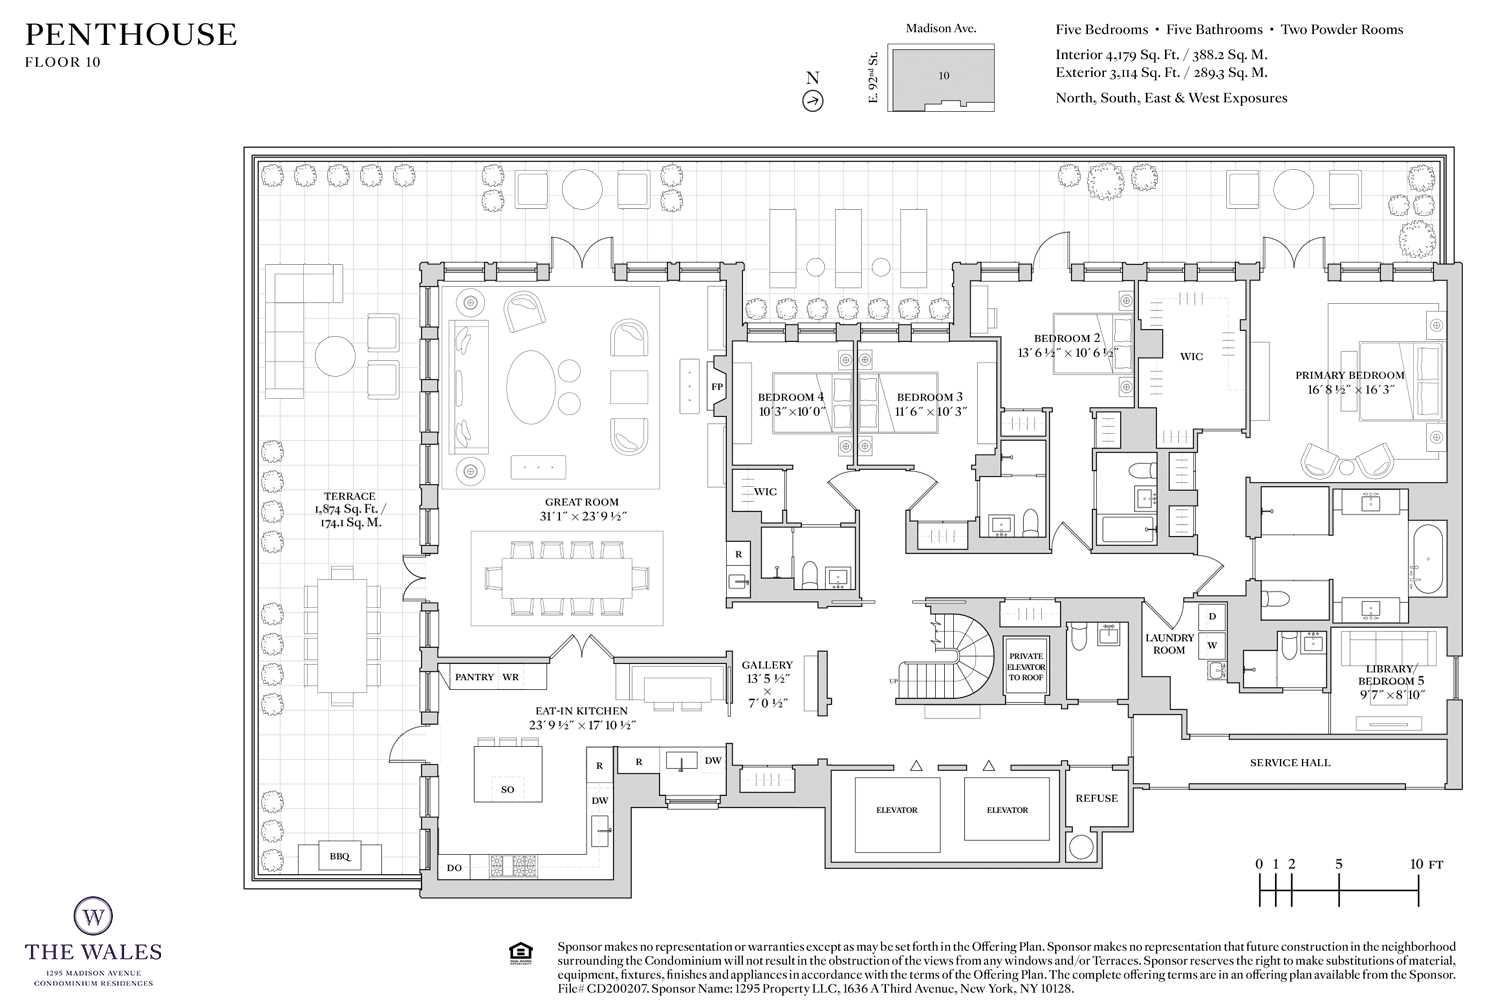 Floorplan for 1295 Madison Avenue, PENTHOUSE